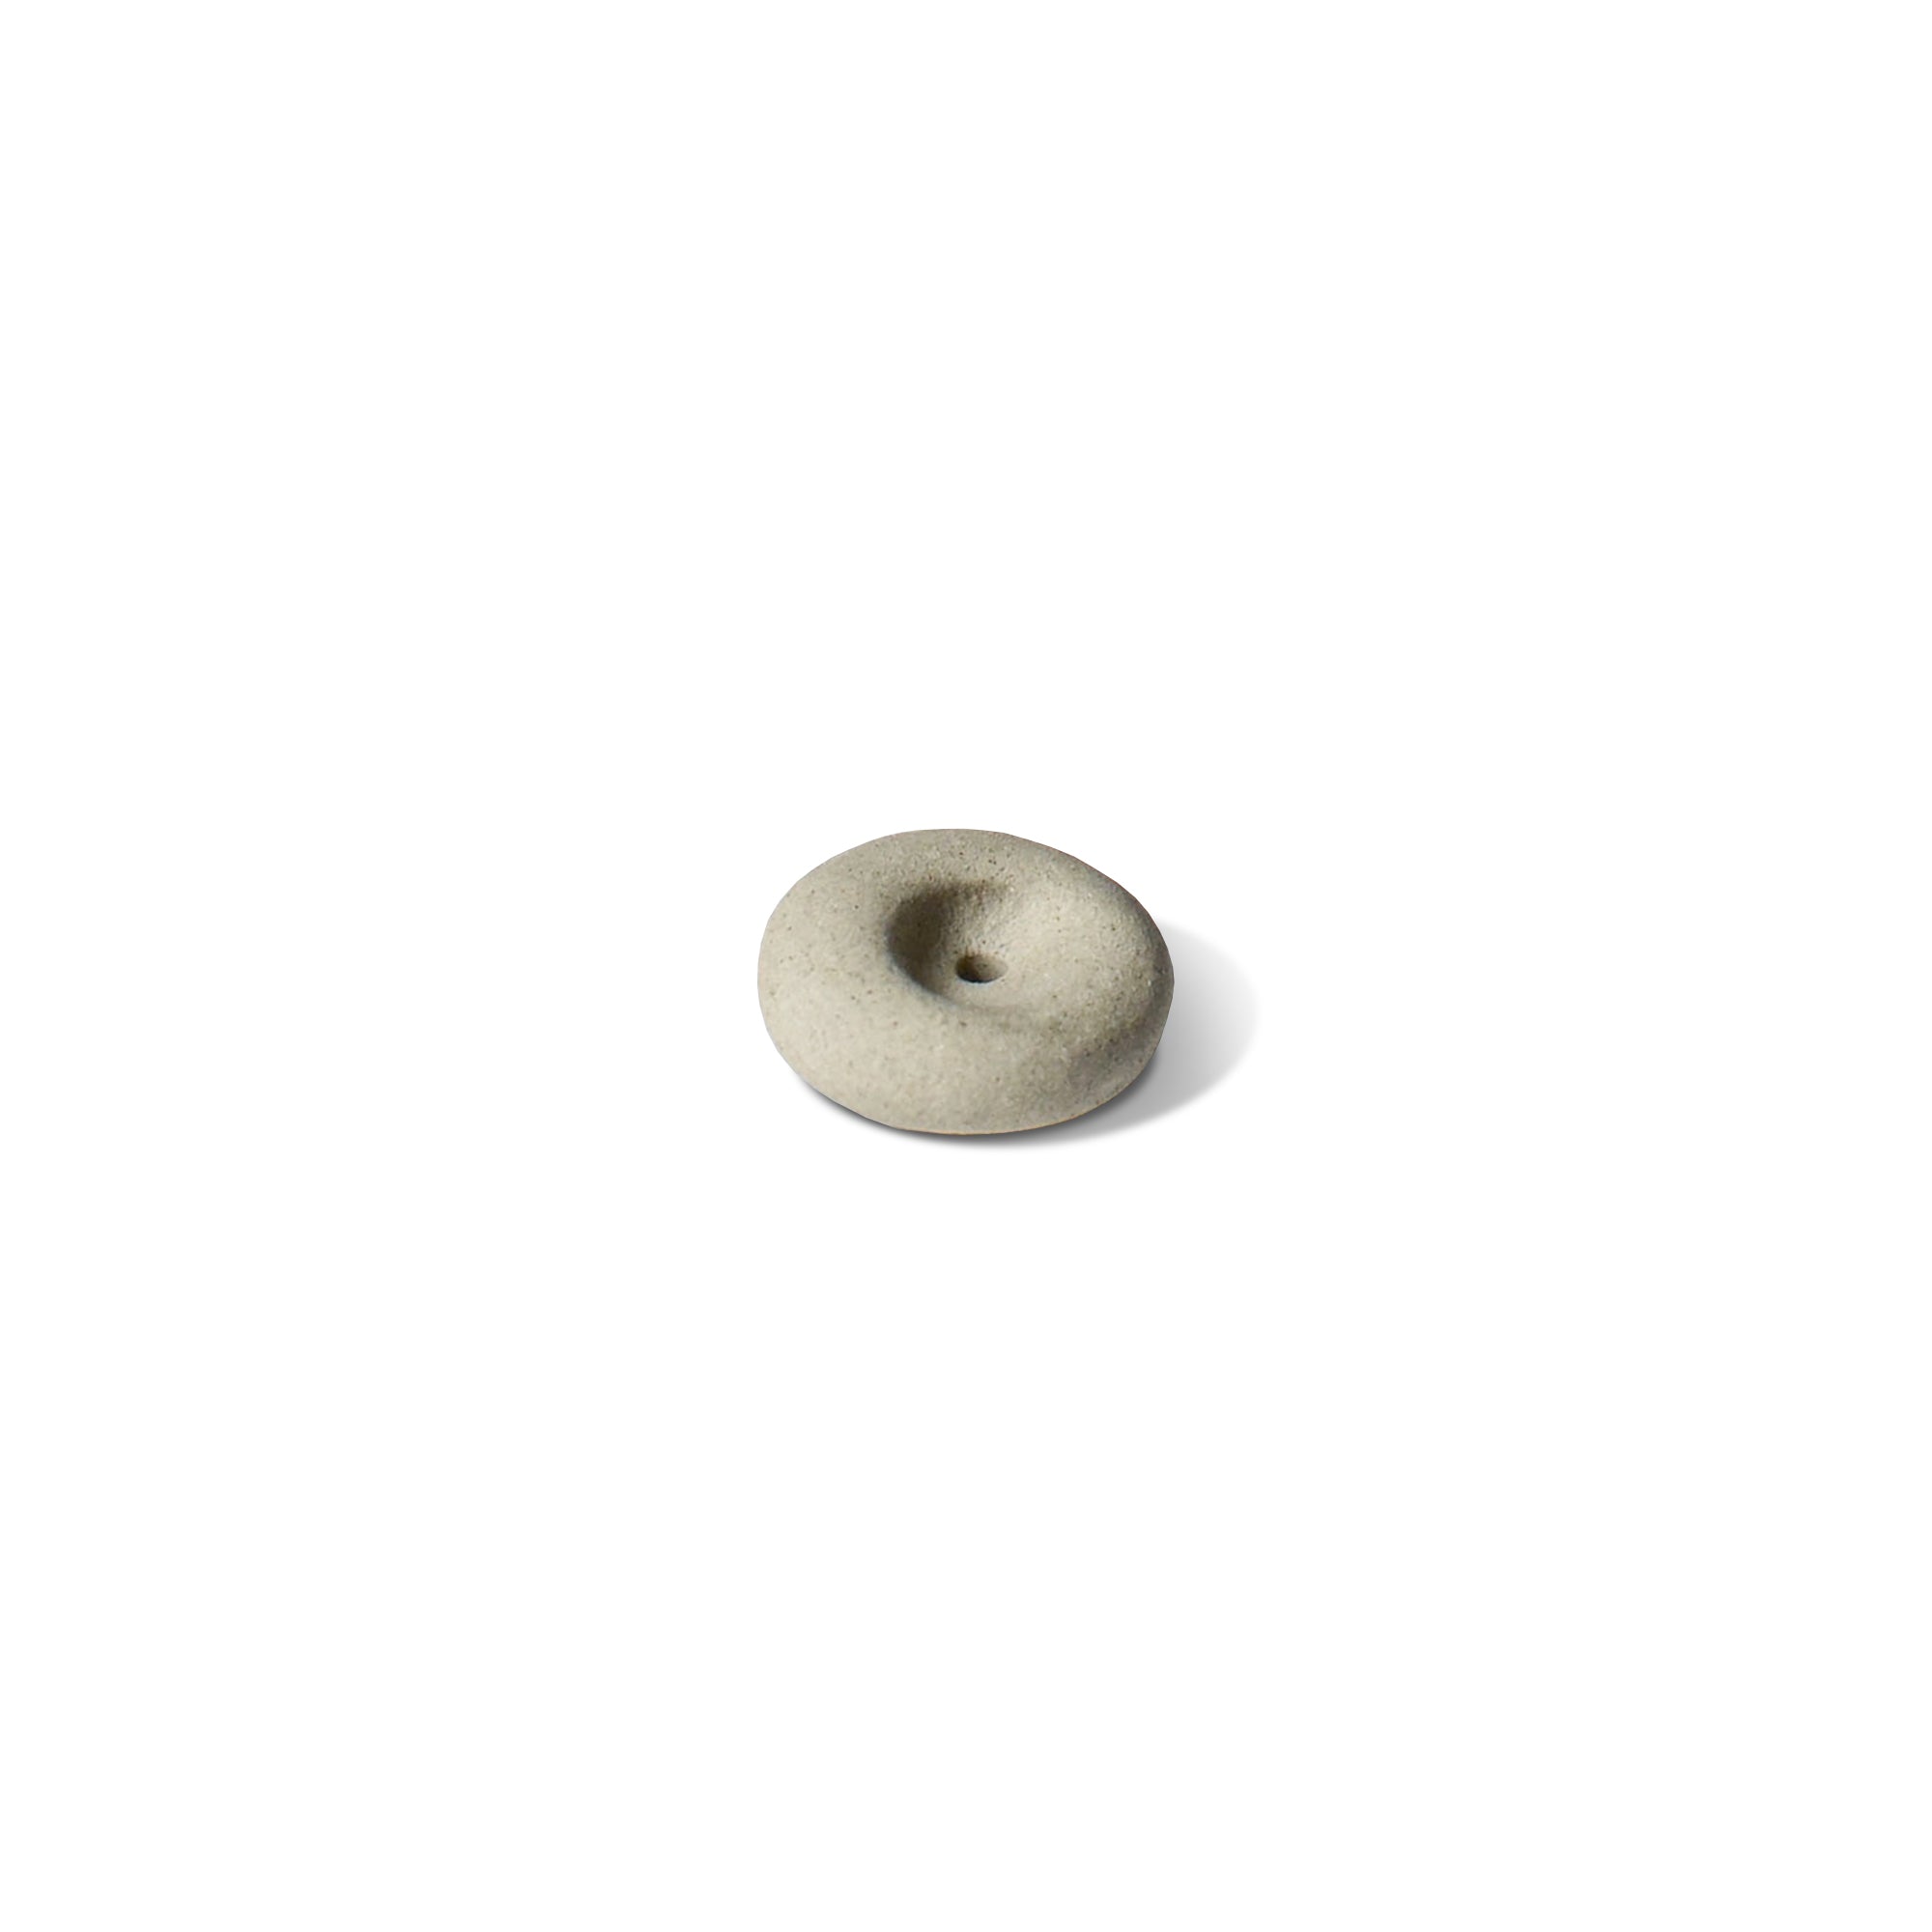 a mini light grey ceramic pebble-shaped incense holder